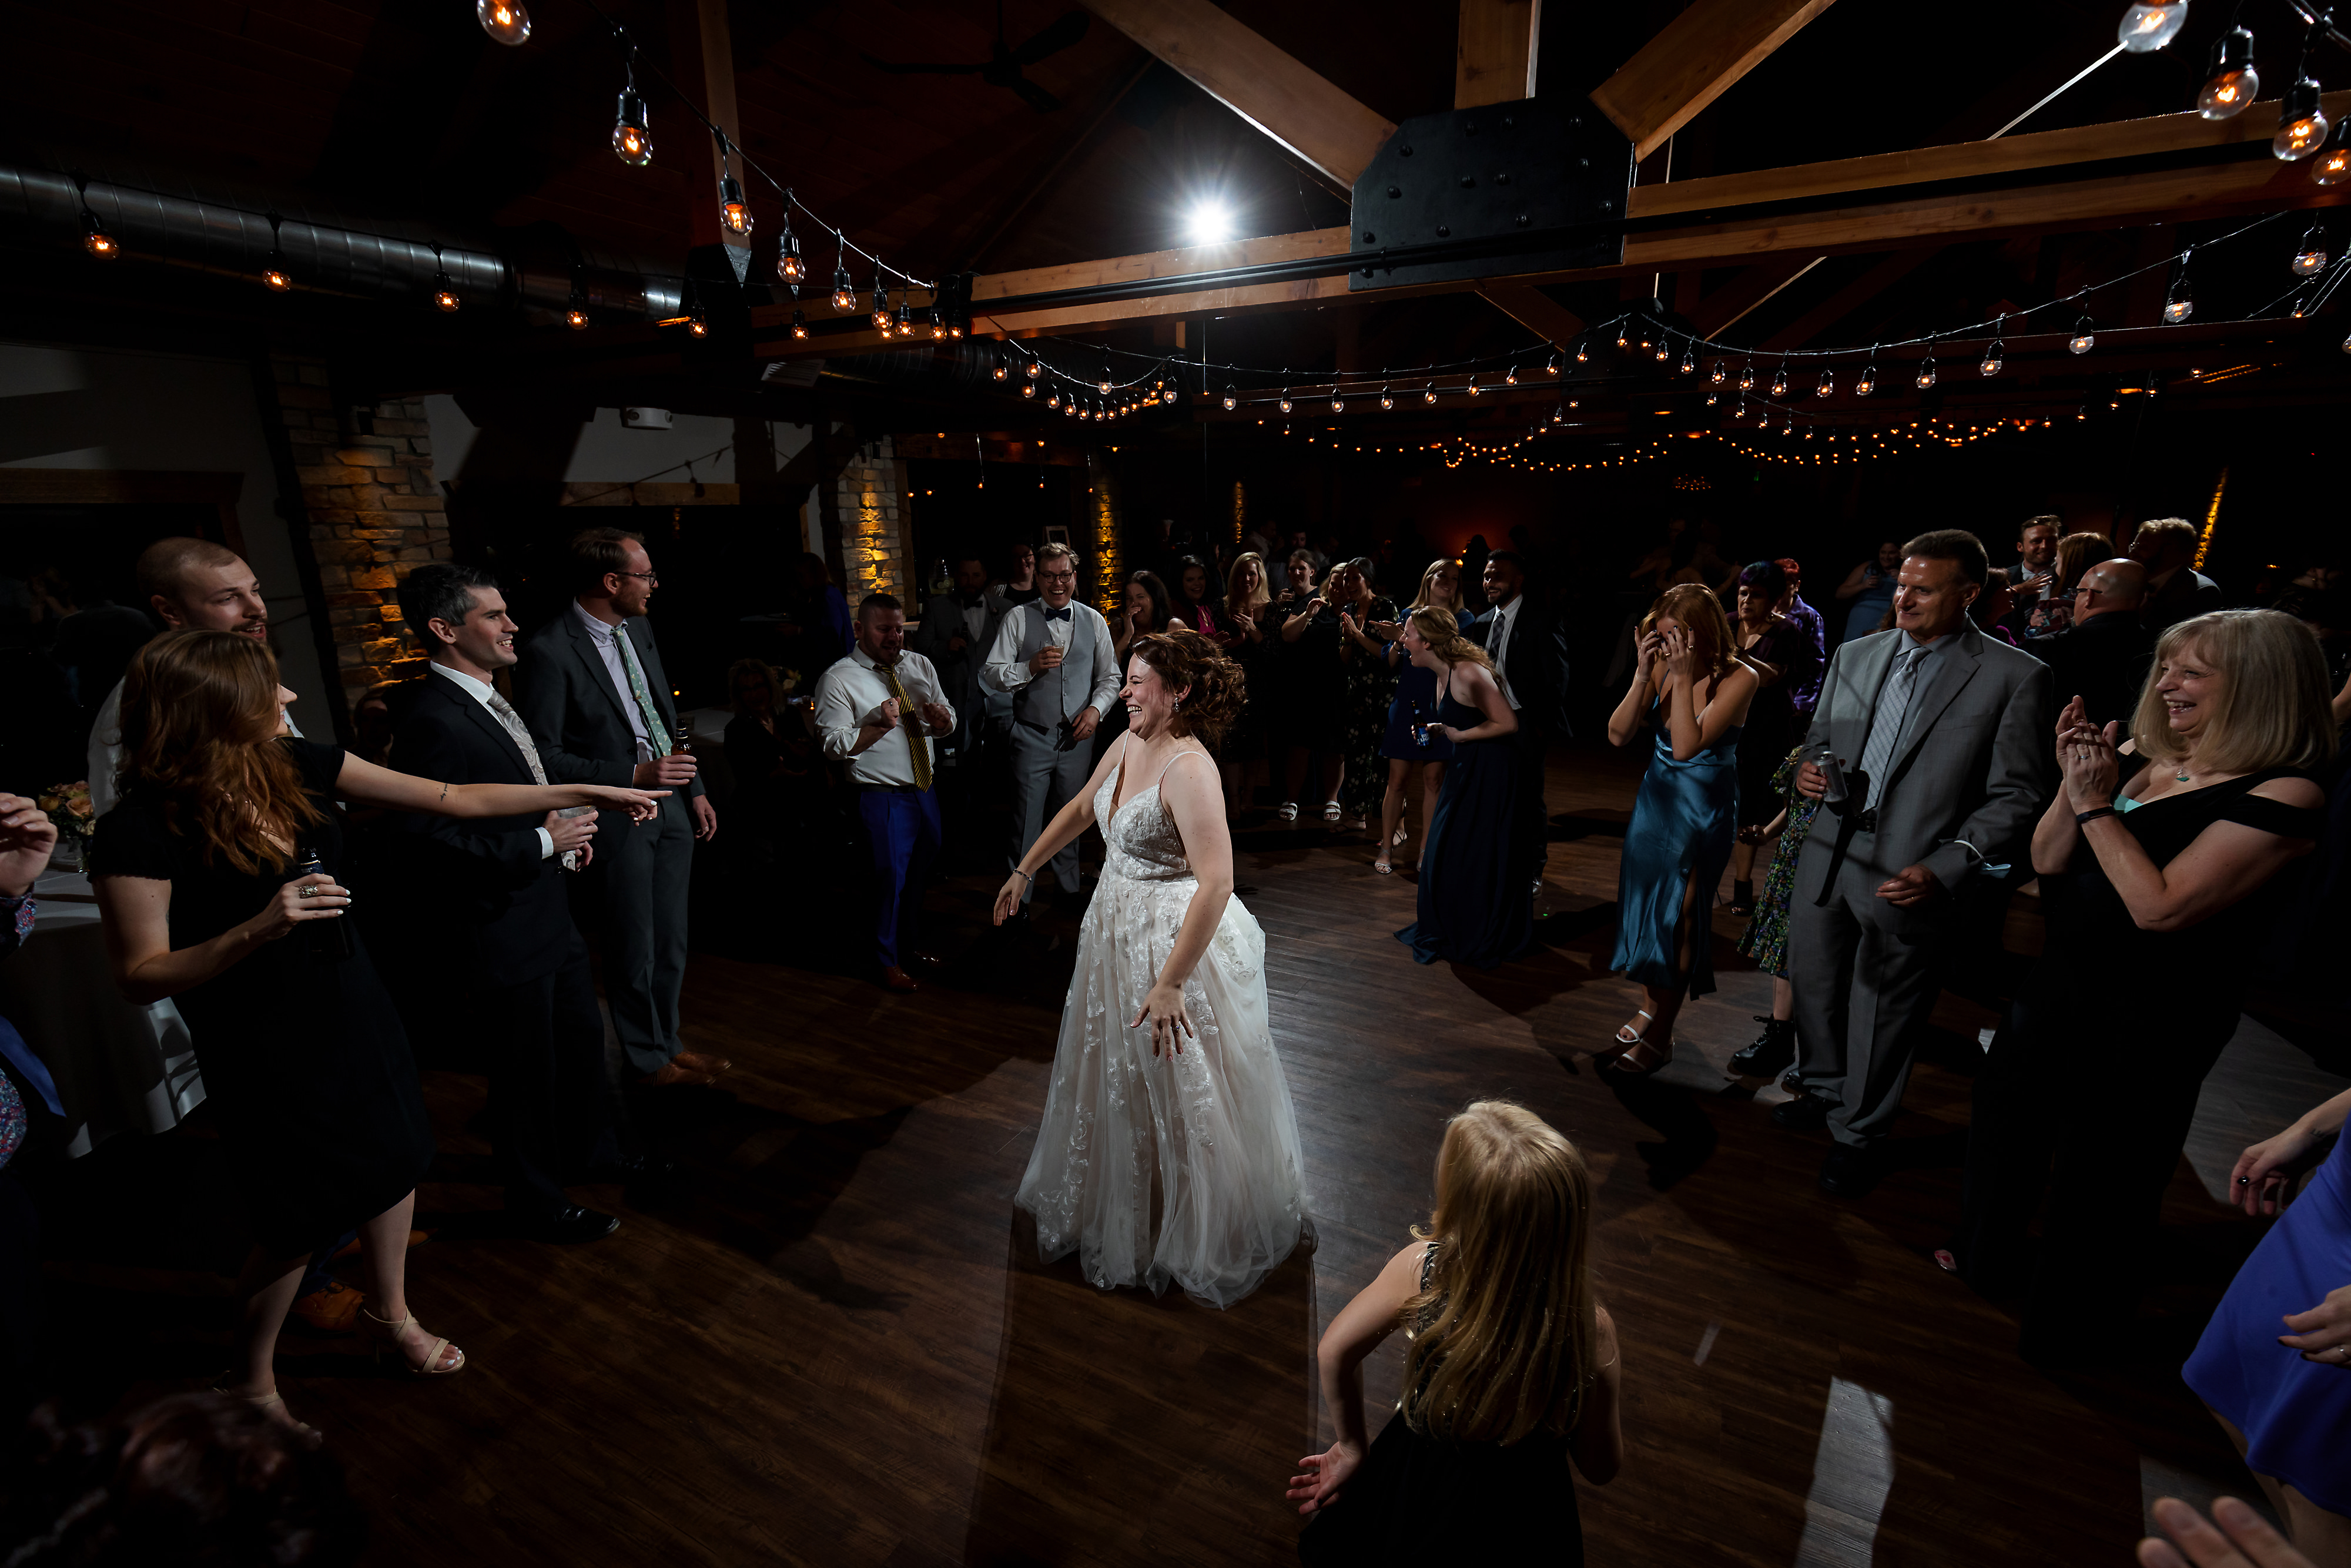 Wedding guests dance during wedding reception at Fishermen's Inn in Elburn Illinois